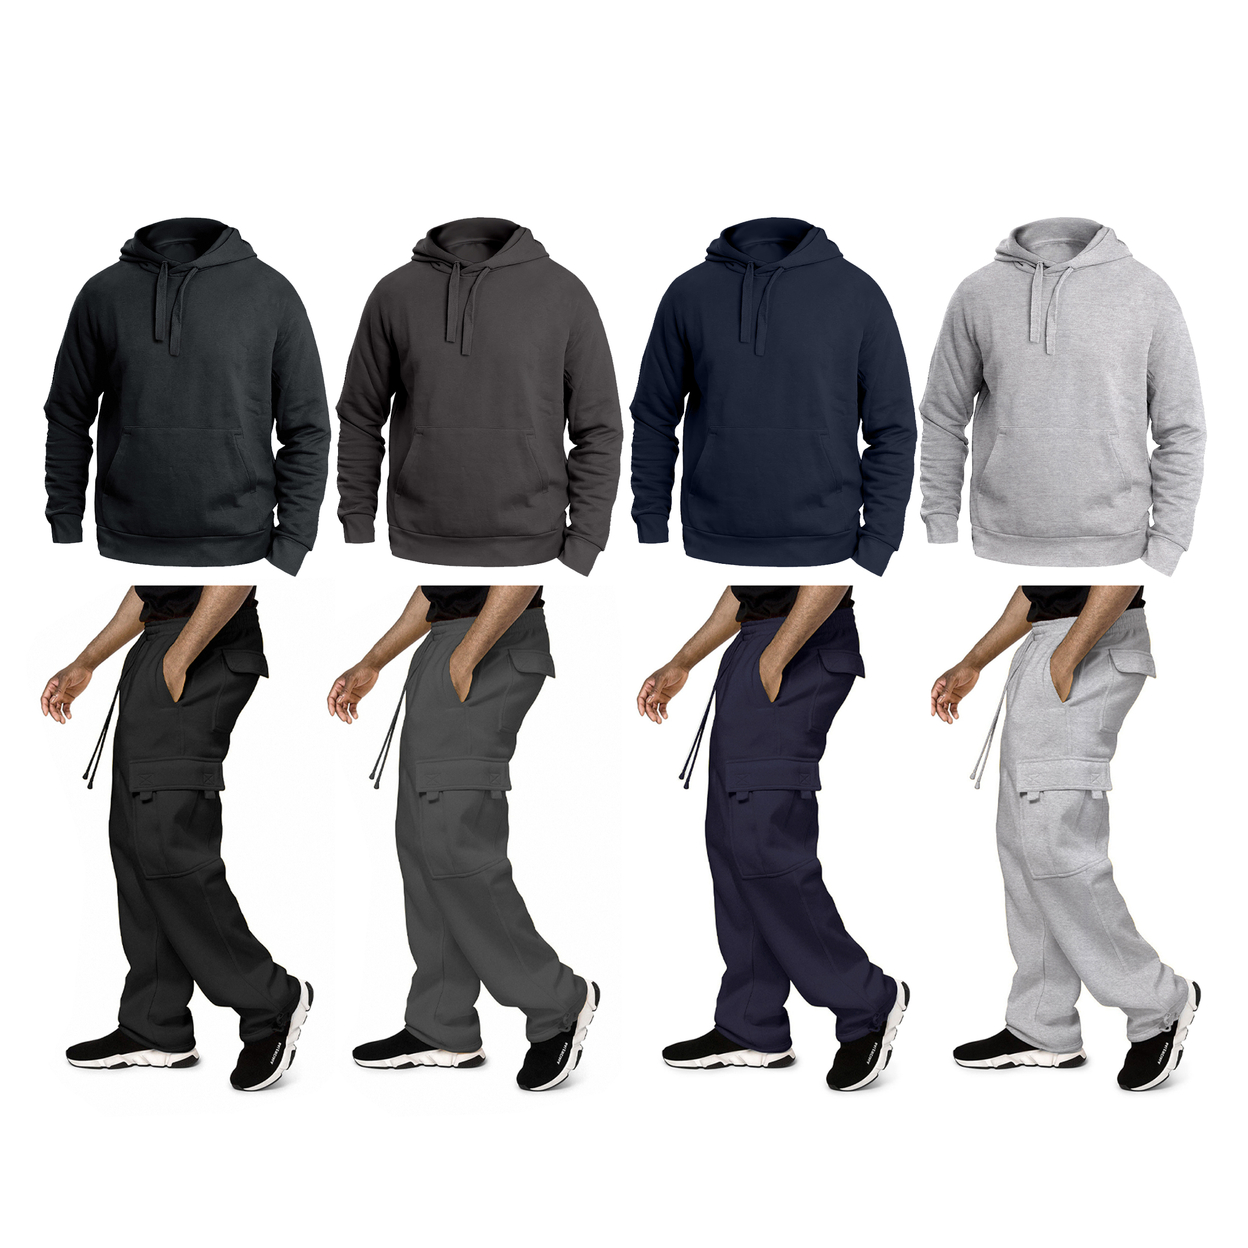 Multi-Pack: Big & Tall Men's Winter Warm Cozy Athletic Fleece Lined Multi-Pocket Cargo Sweatsuit - Grey, 2-pack, Xx-large